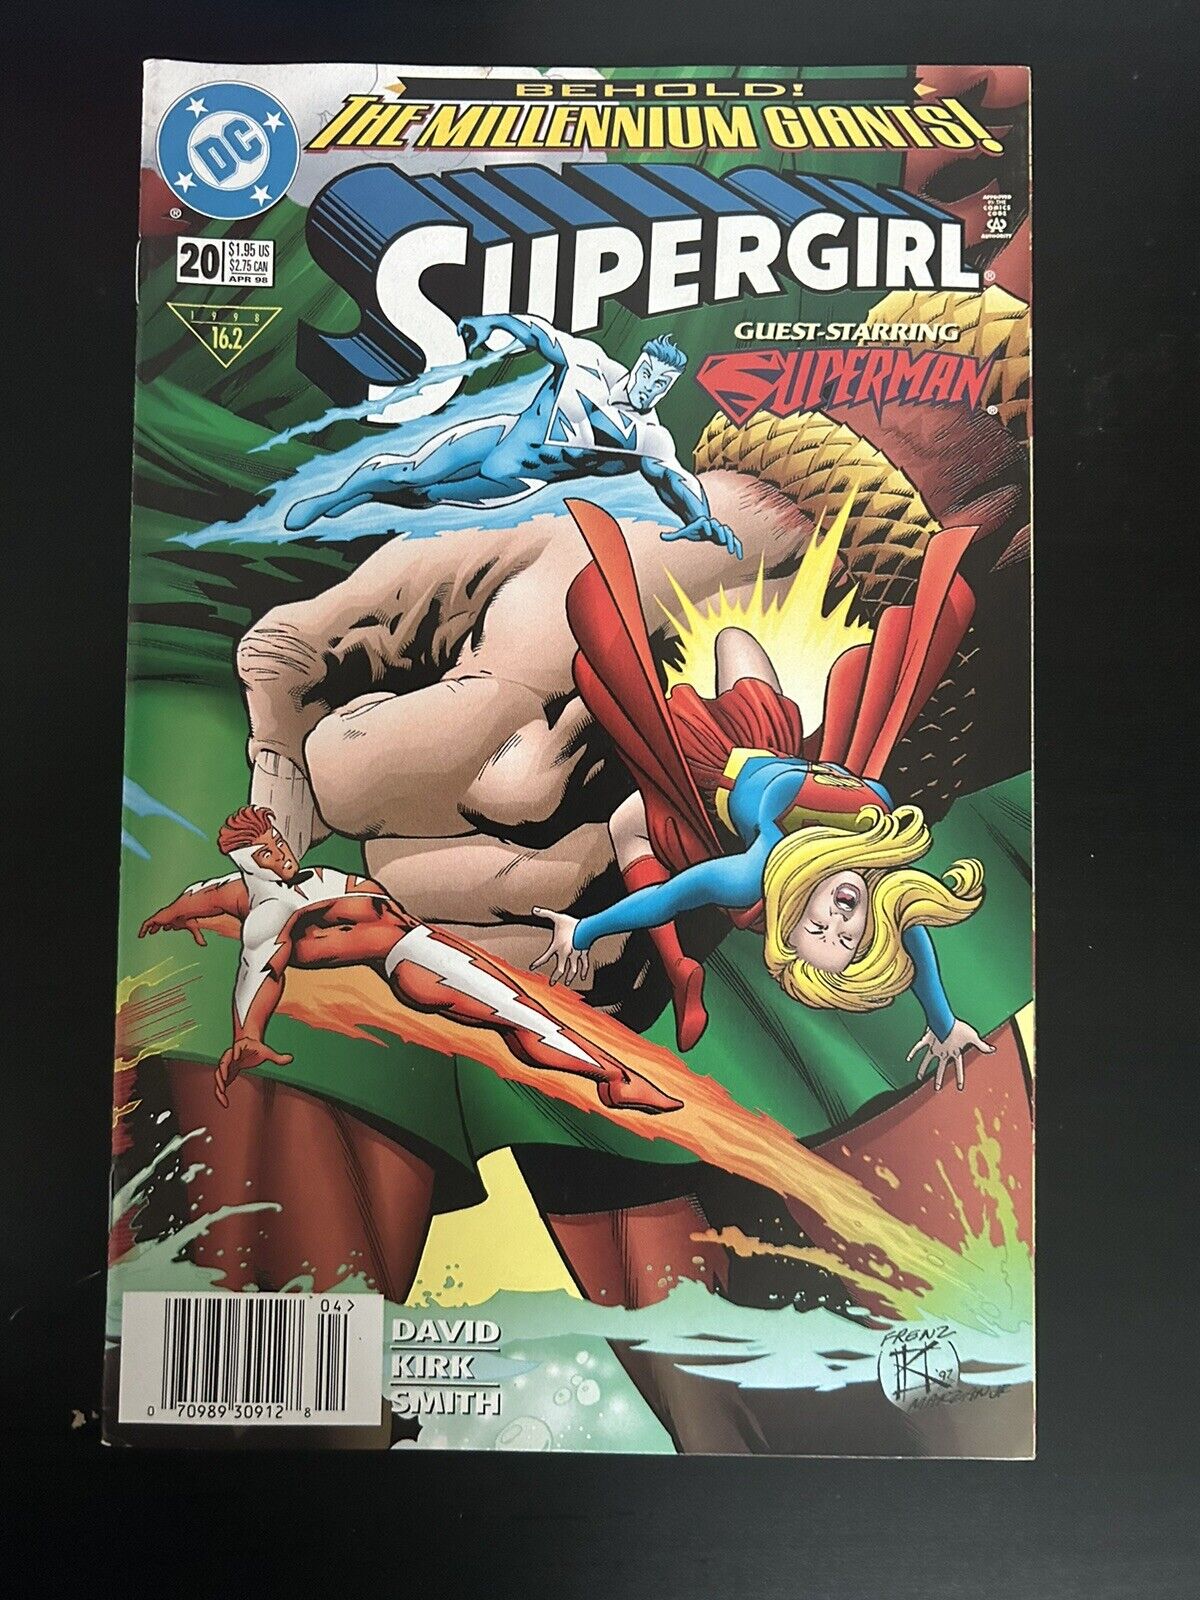 DC Comics Behold The Millennium Giants Supergirl # 20 Superman Appearance